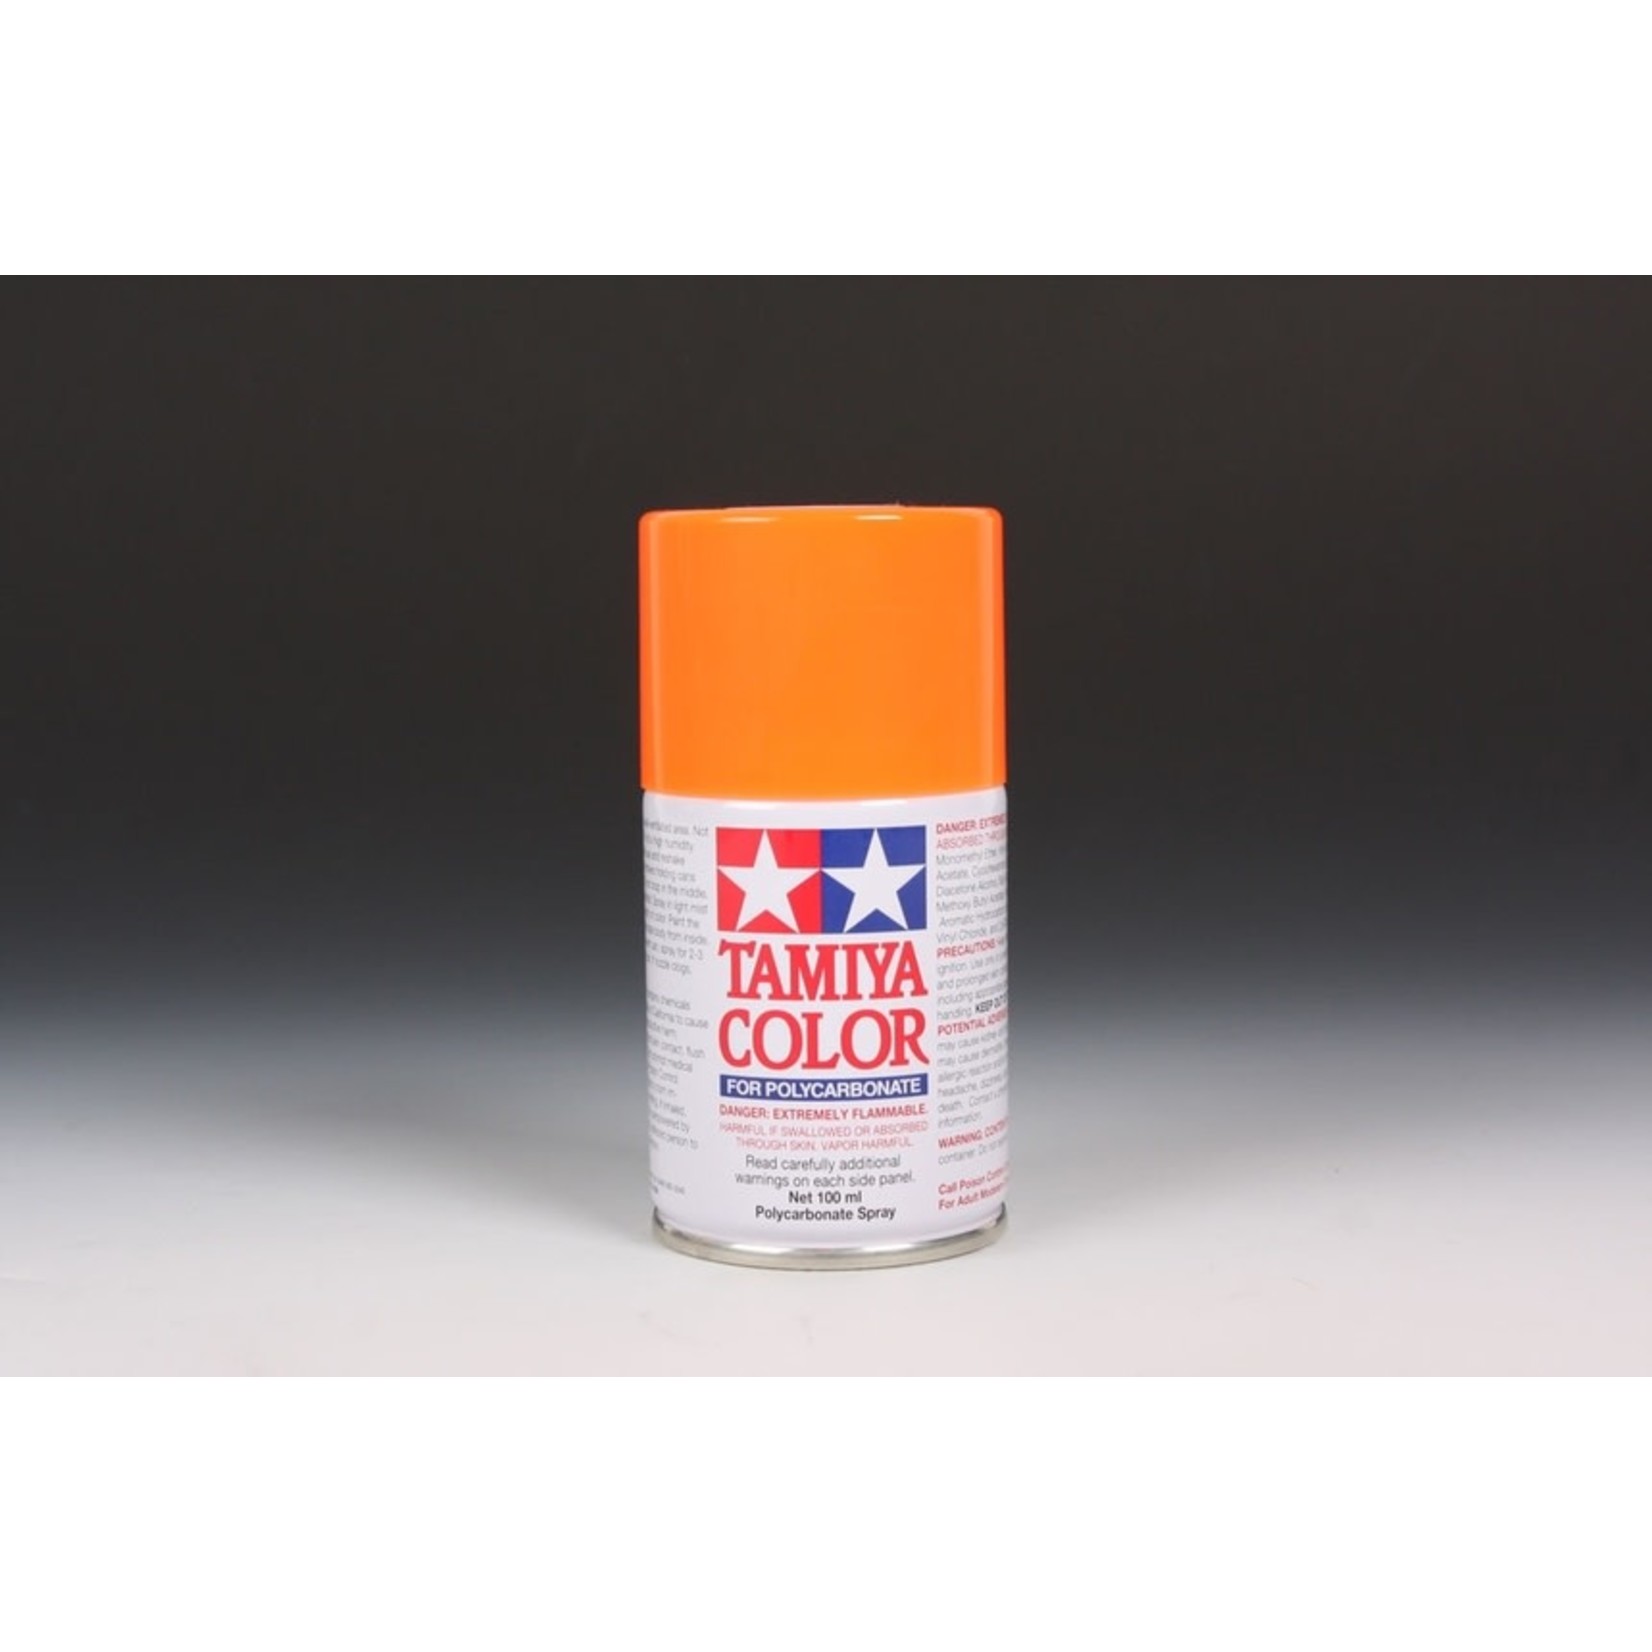 Tamiya TAM86024 Tamiya Polycarbonate PS-24 Fluorescent Orange